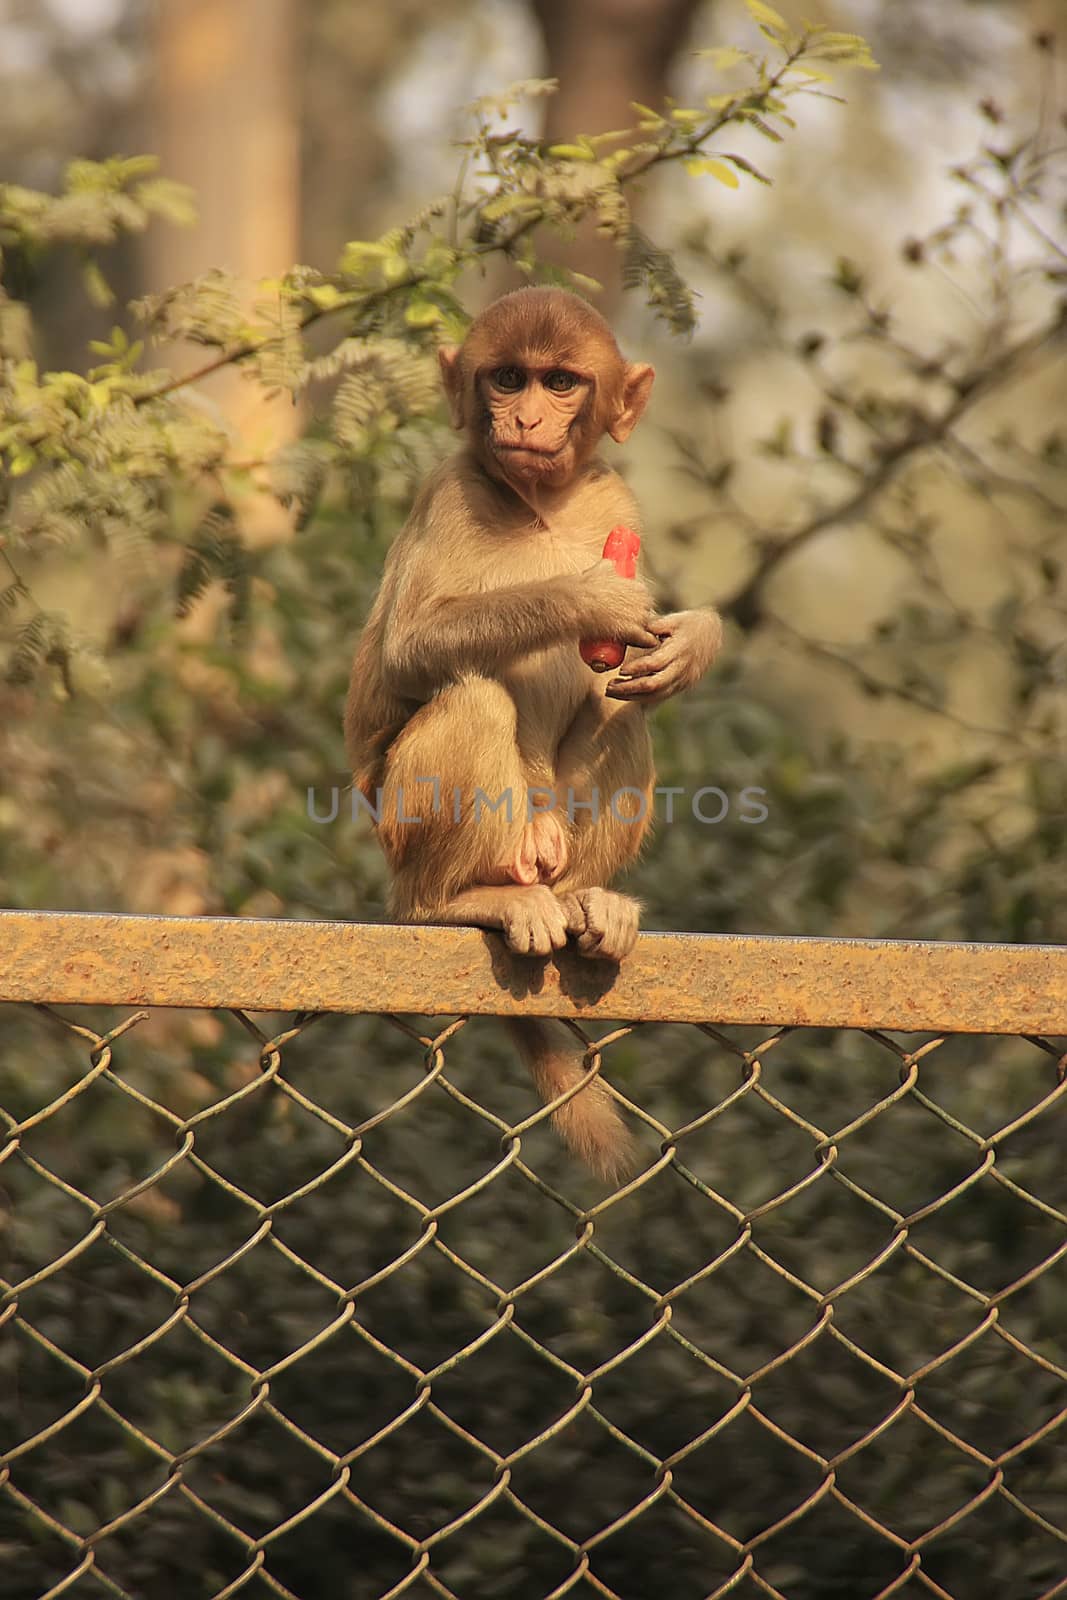 Rhesus Macaque eating carrot, New Delhi, India